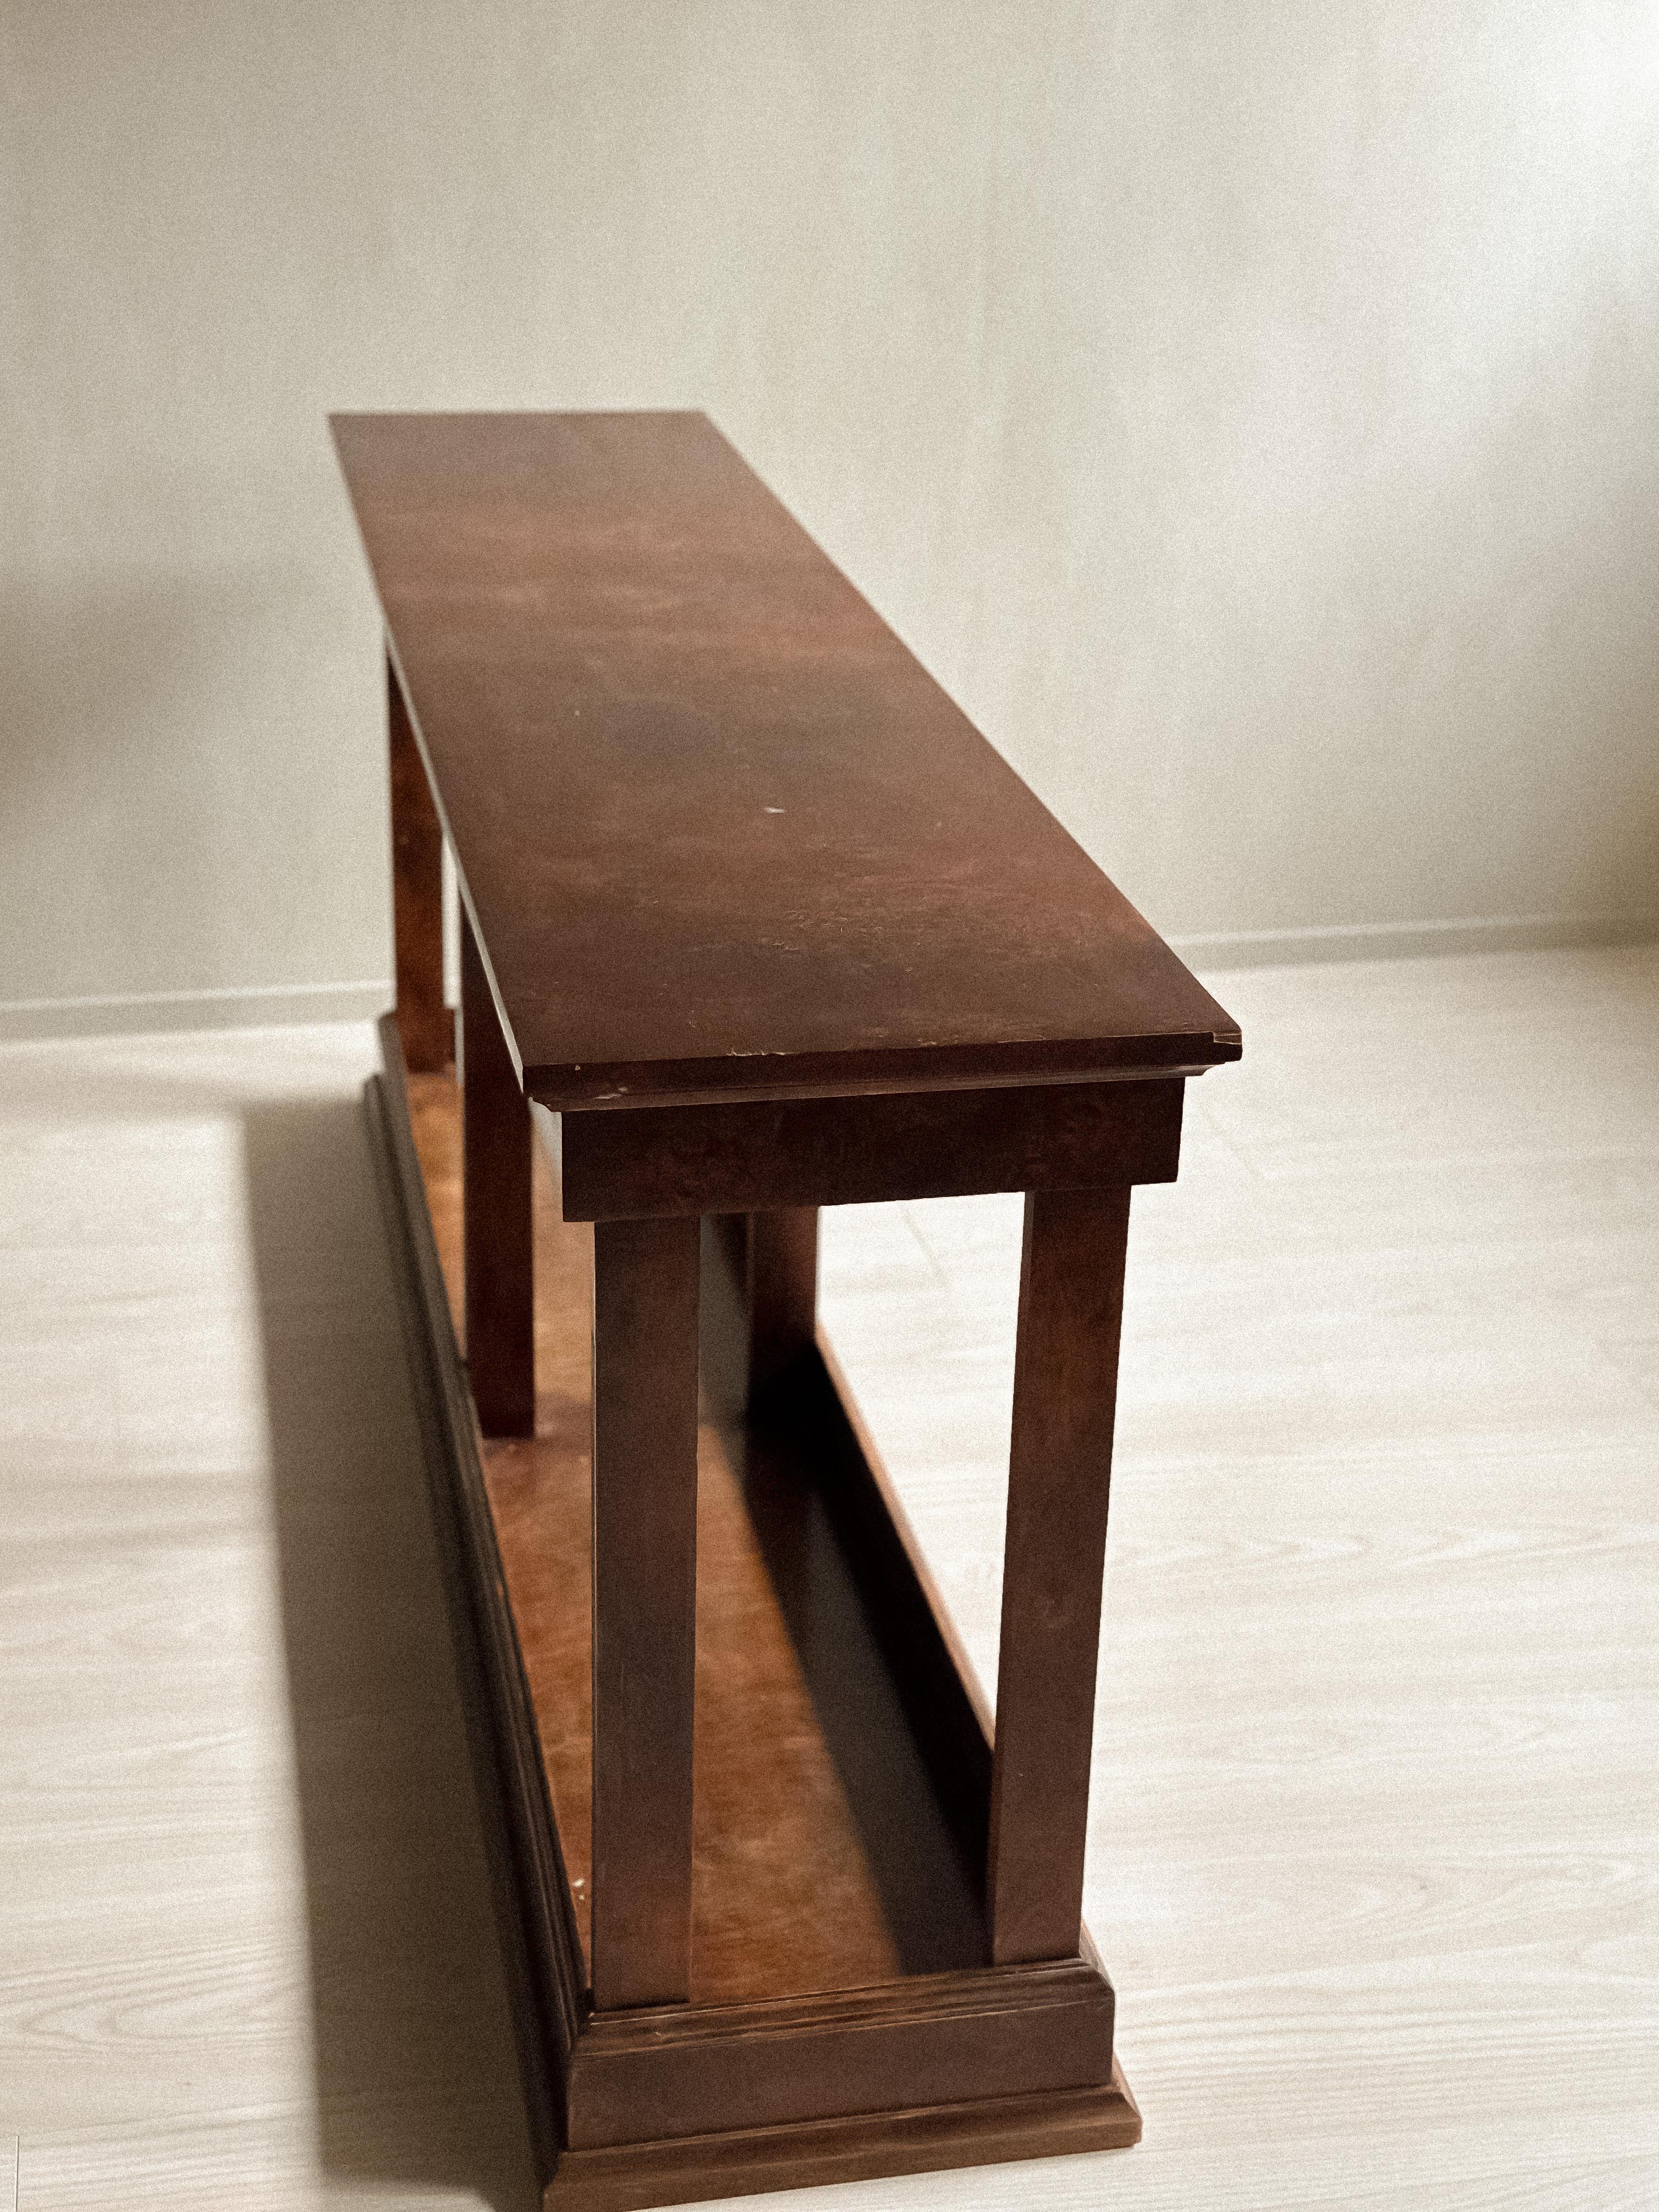 Veneer An Art Deco Console Table, Birch Wood, Scandinavia c. 1930s For Sale